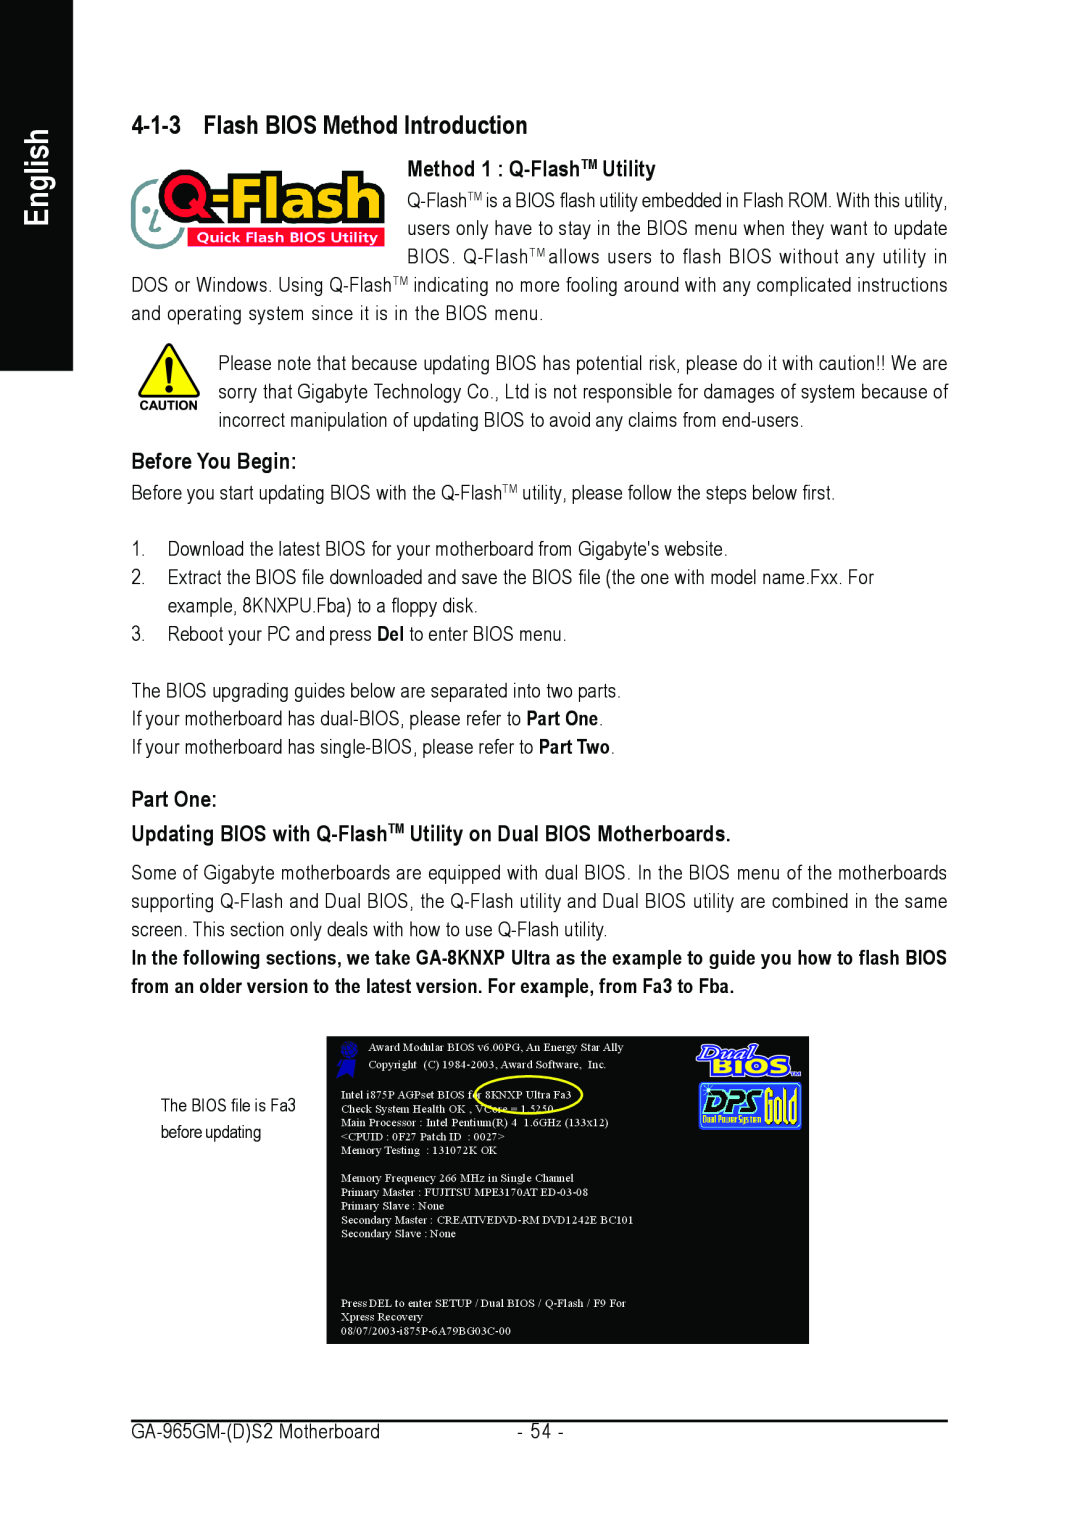 Gigabyte GA-965GM-DS2 Flash BIOS Method Introduction, Method 1 Q-FlashTM Utility, Before You Begin, Part One, English 